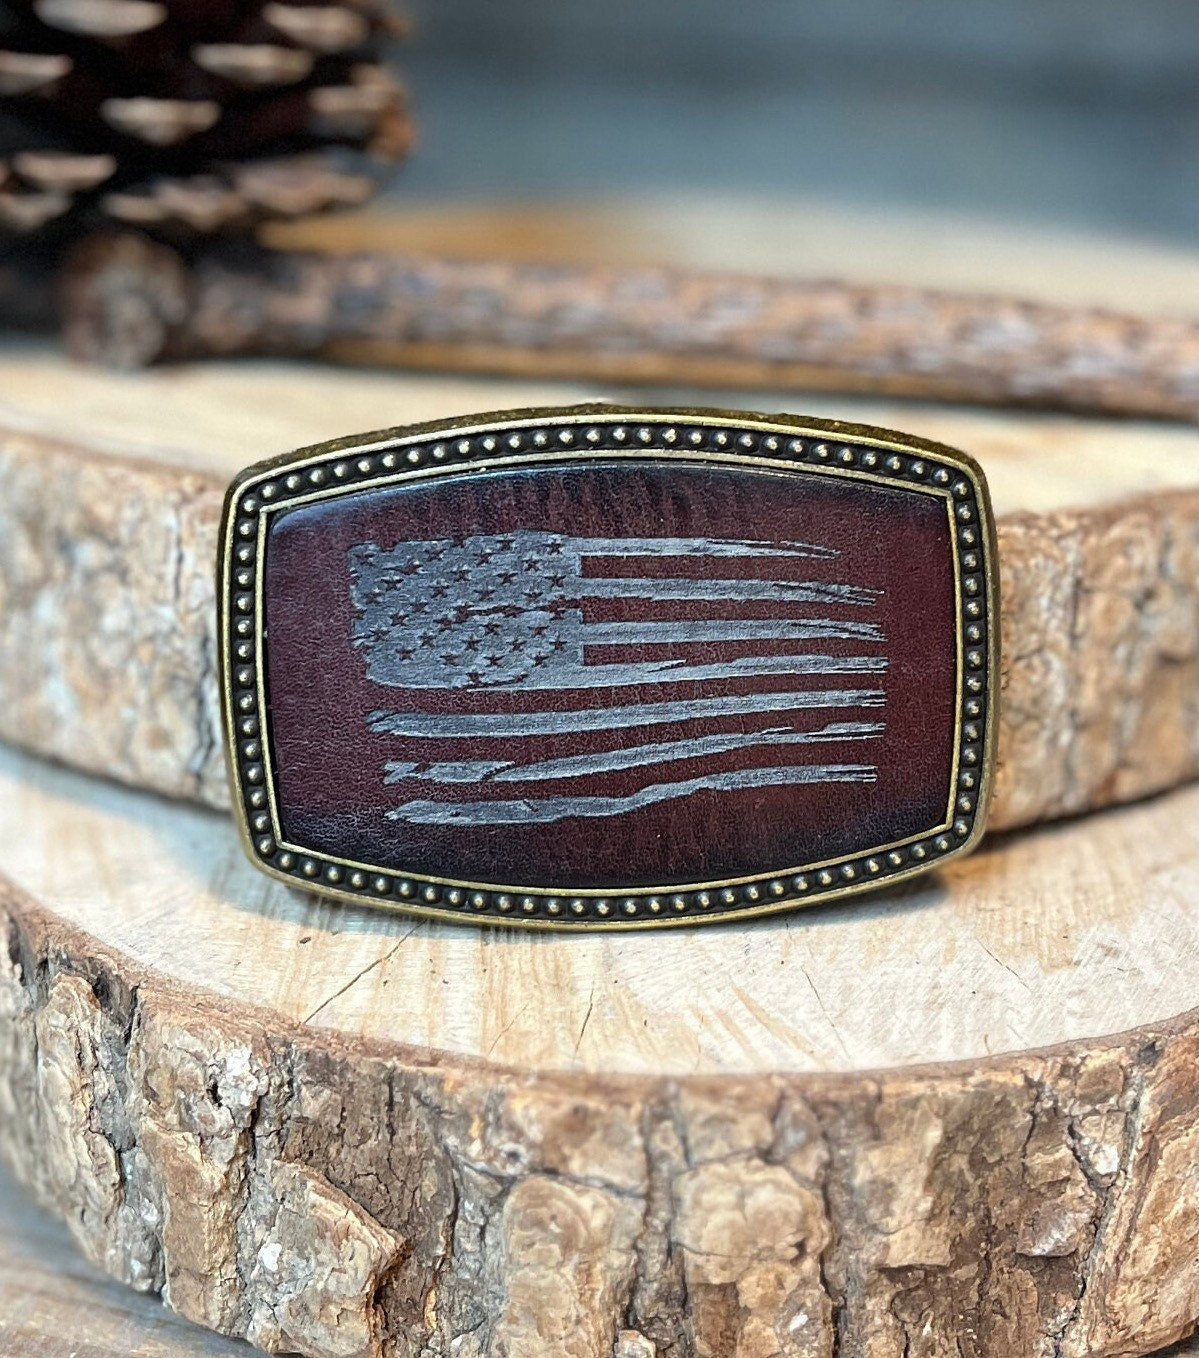 American flag belt buckle with belt